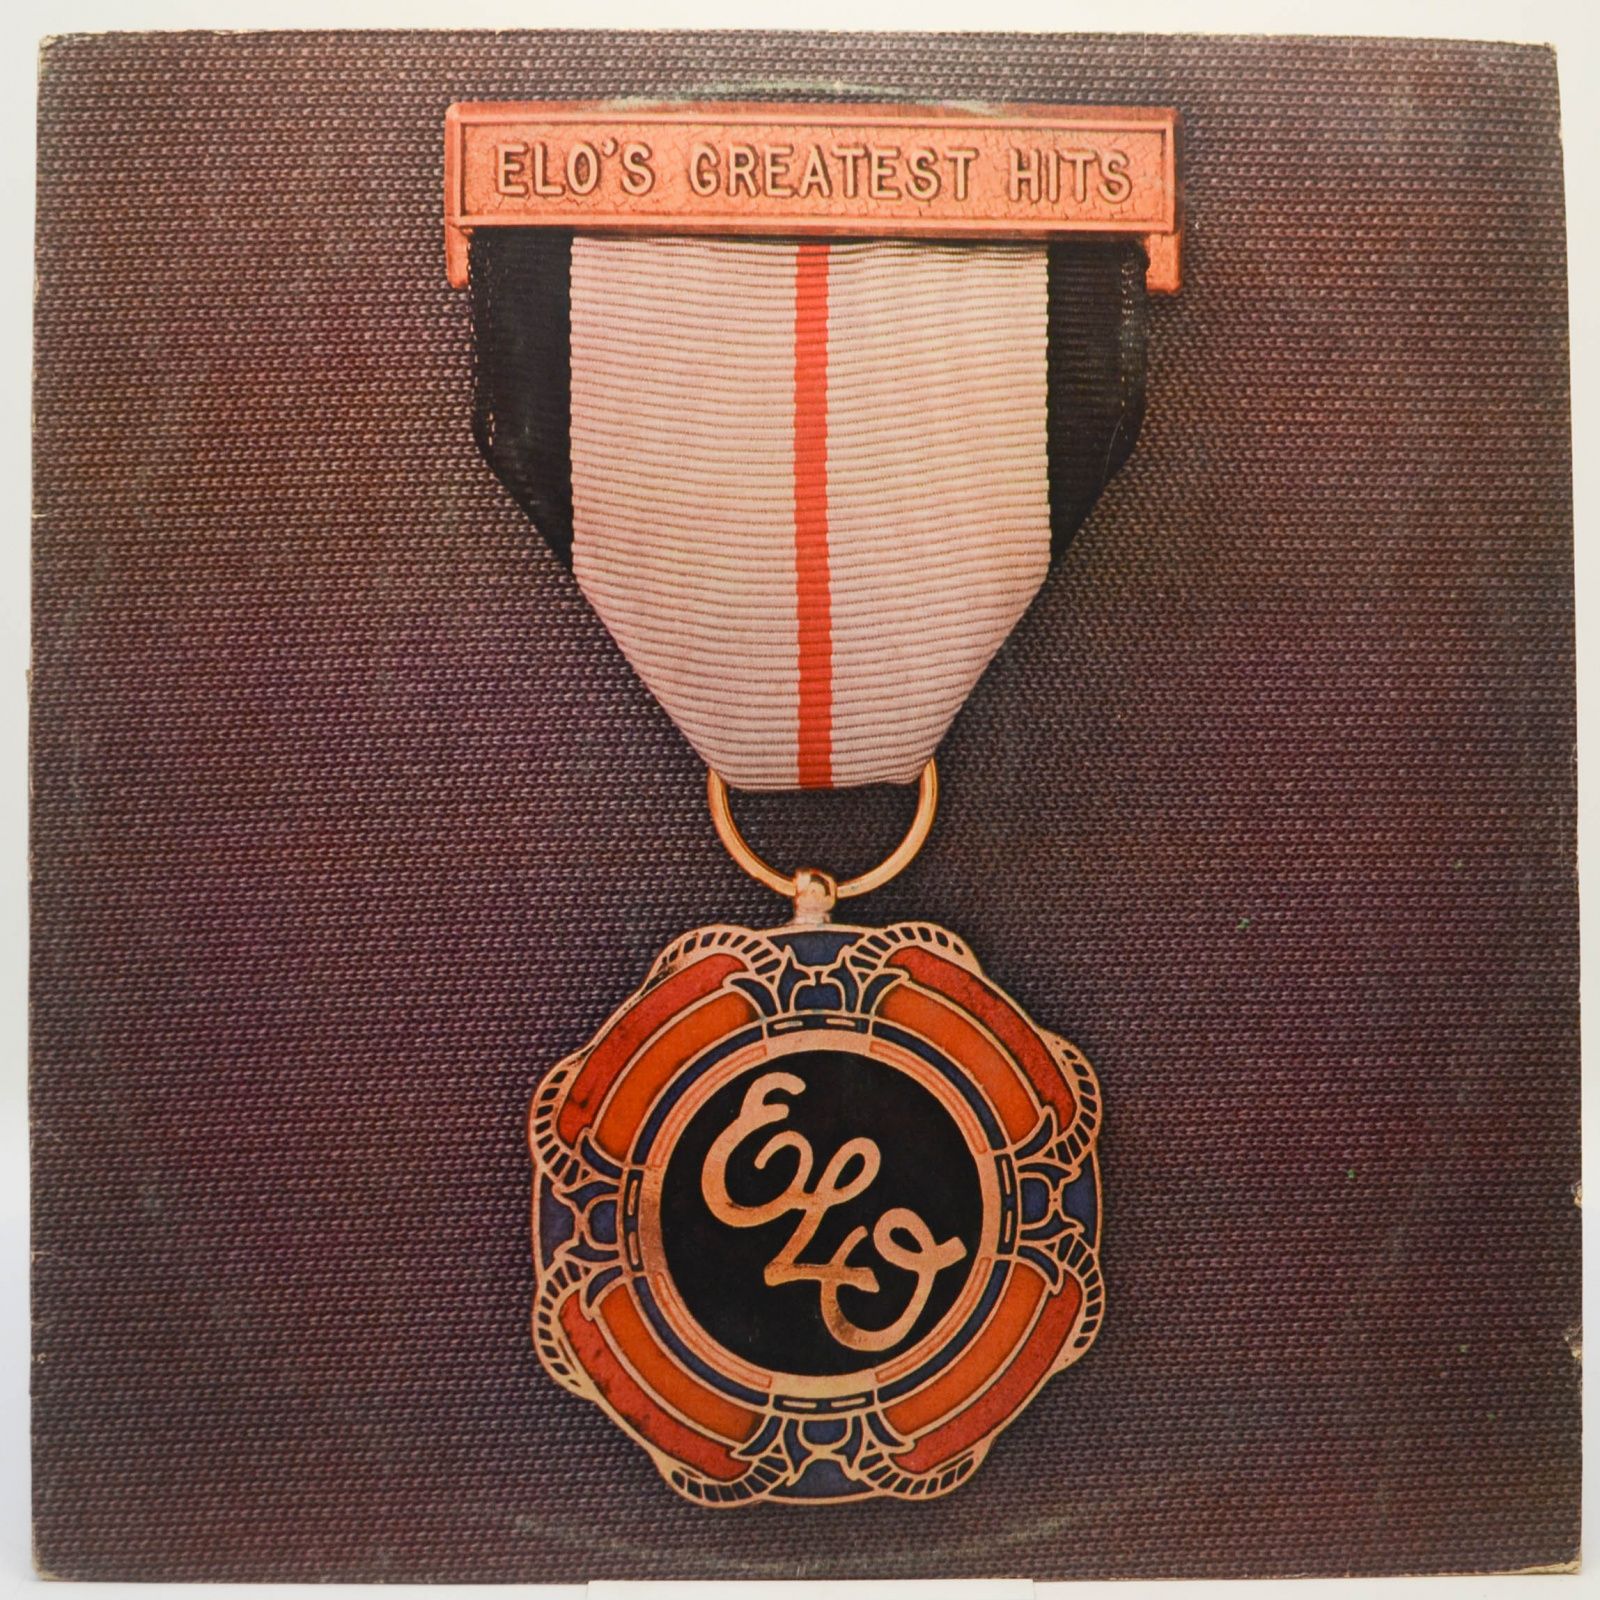 ELO's Greatest Hits, 1979